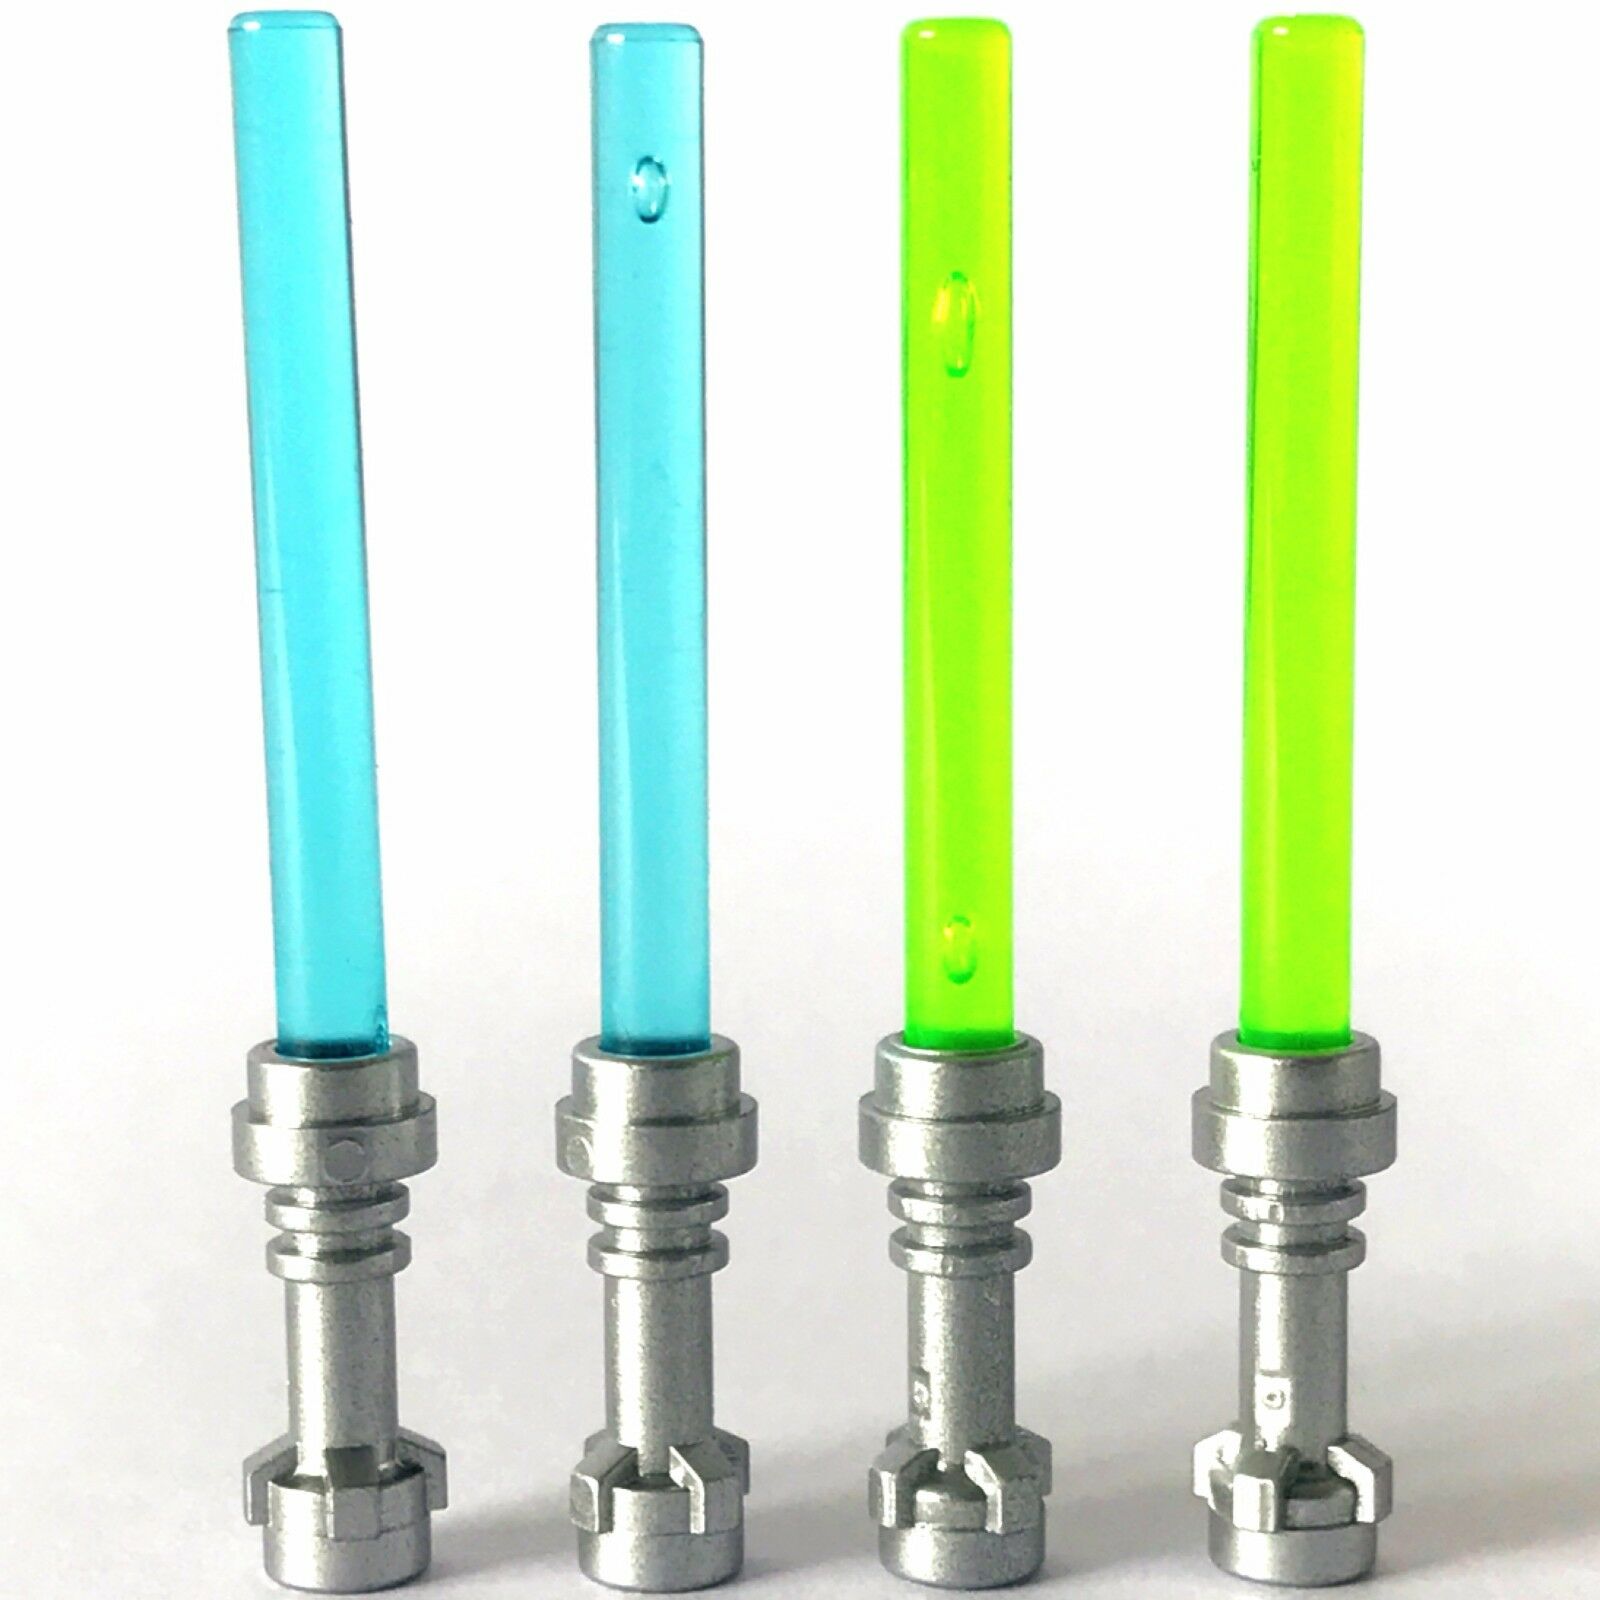 2 x Star Wars LEGO Bright Green & 2 x Blue Lightsabers Jedi Sith Weapon Parts - Bricks & Figures